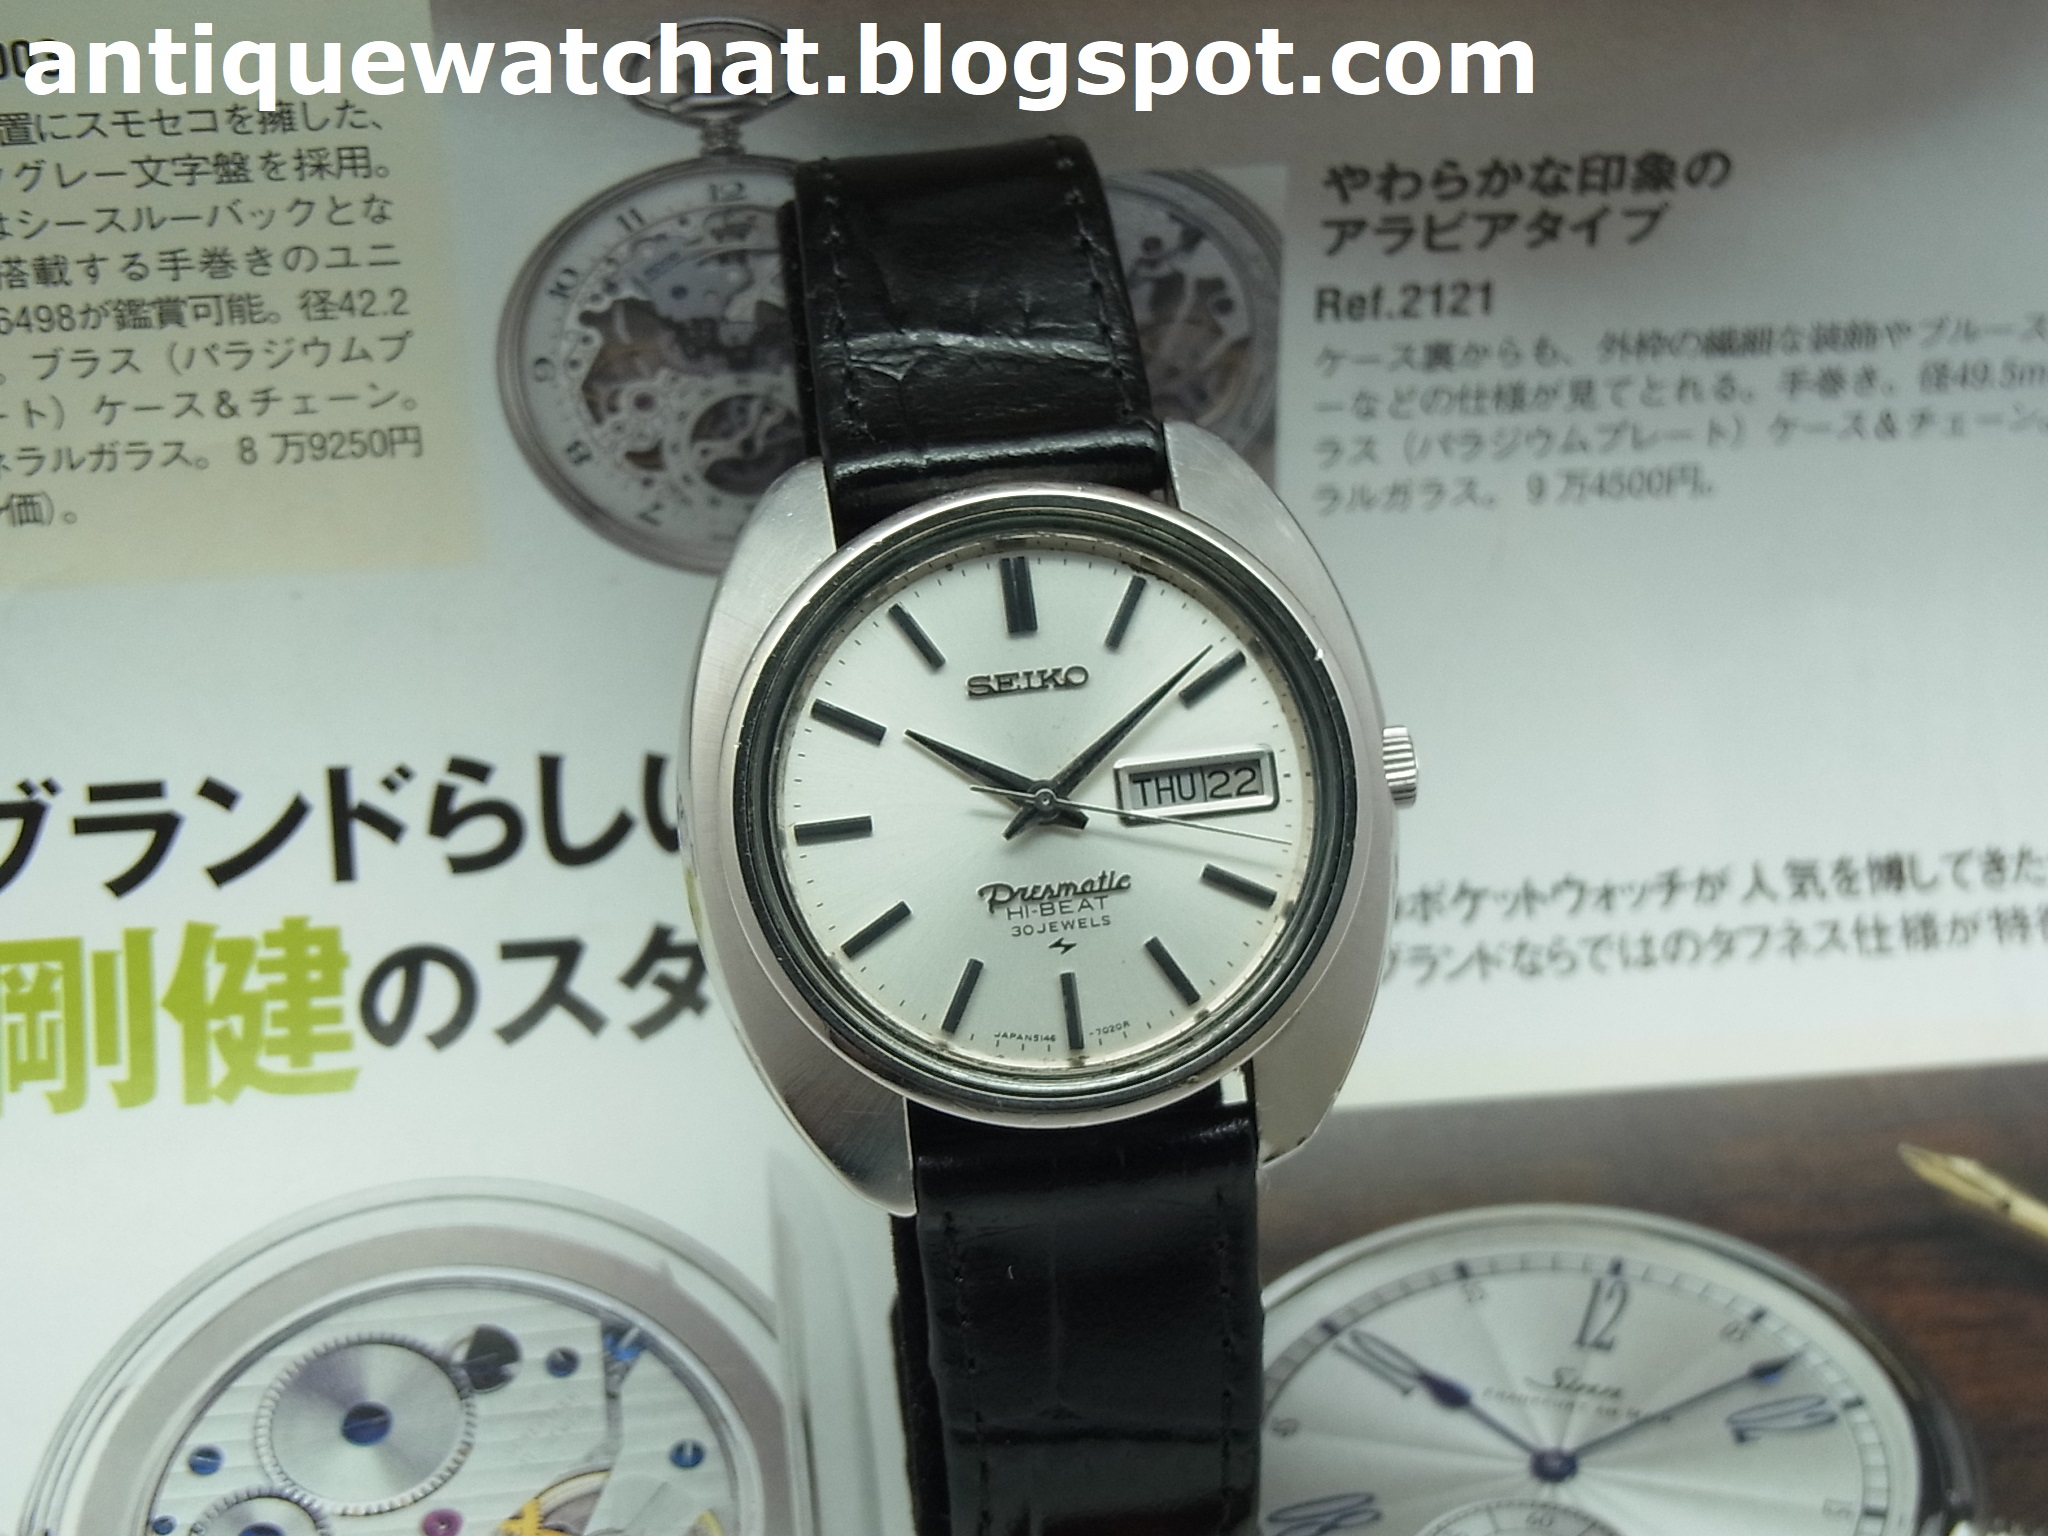 Antique Watch Bar: SEIKO PRESMATIC HI-BEAT 30 JEWELS 5146-7080